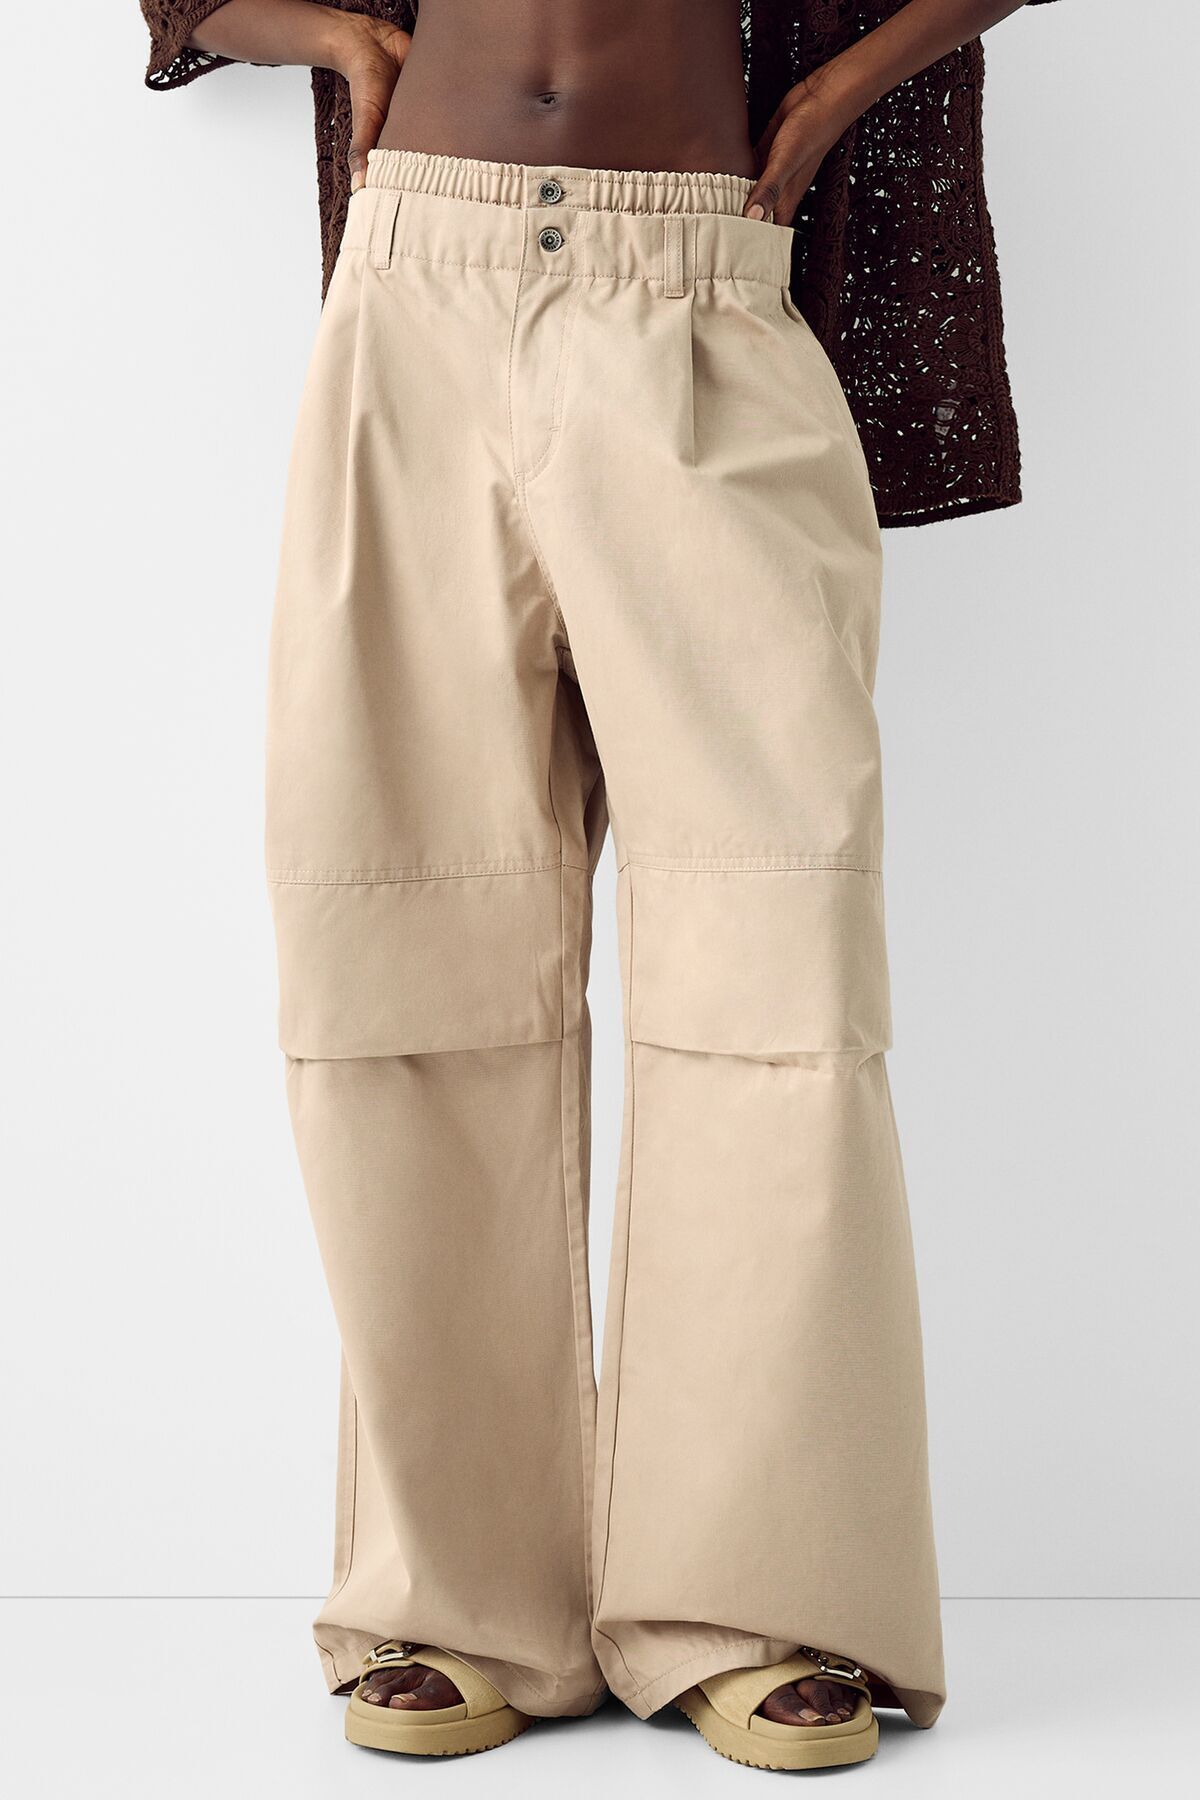 Bershka Fitilli kumaş çift bel bantlı pantolon